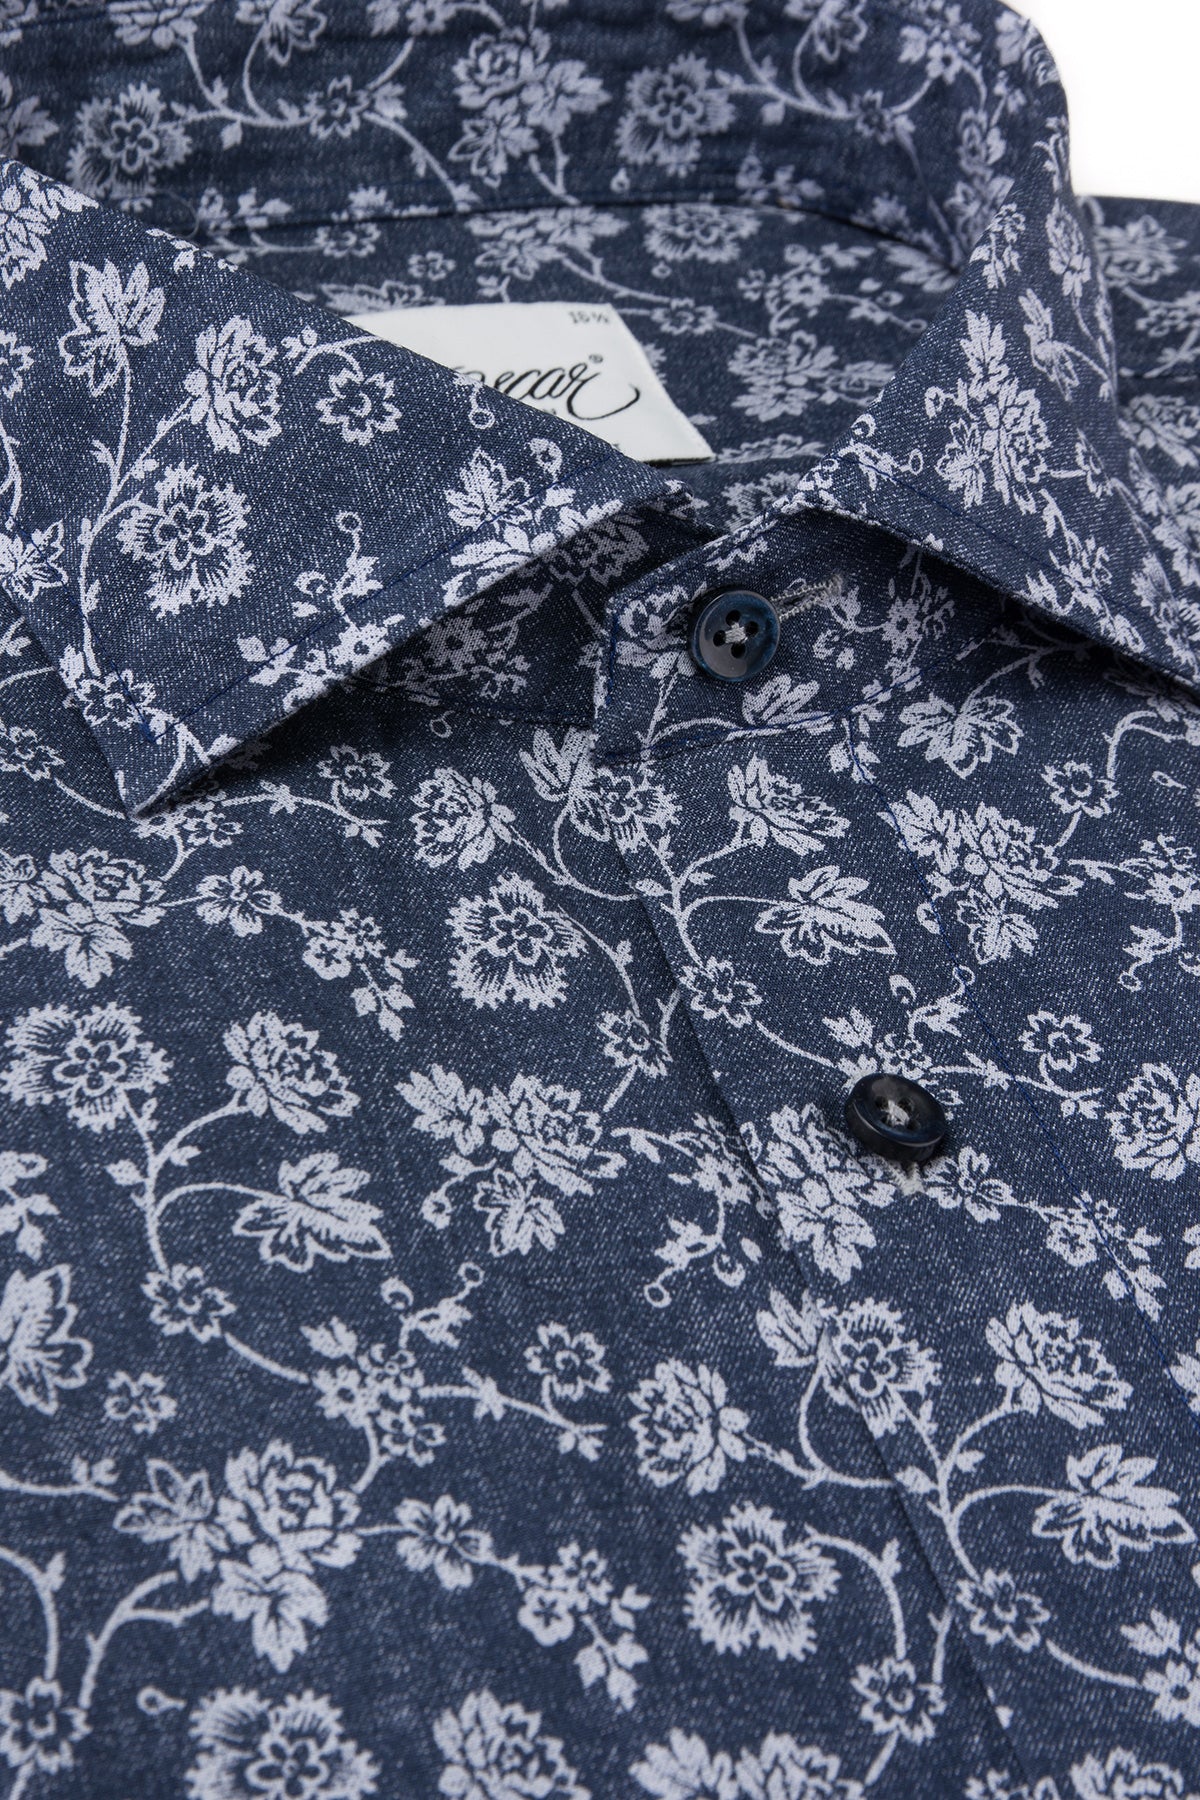 Indigo blue flower printed slim fit shirt